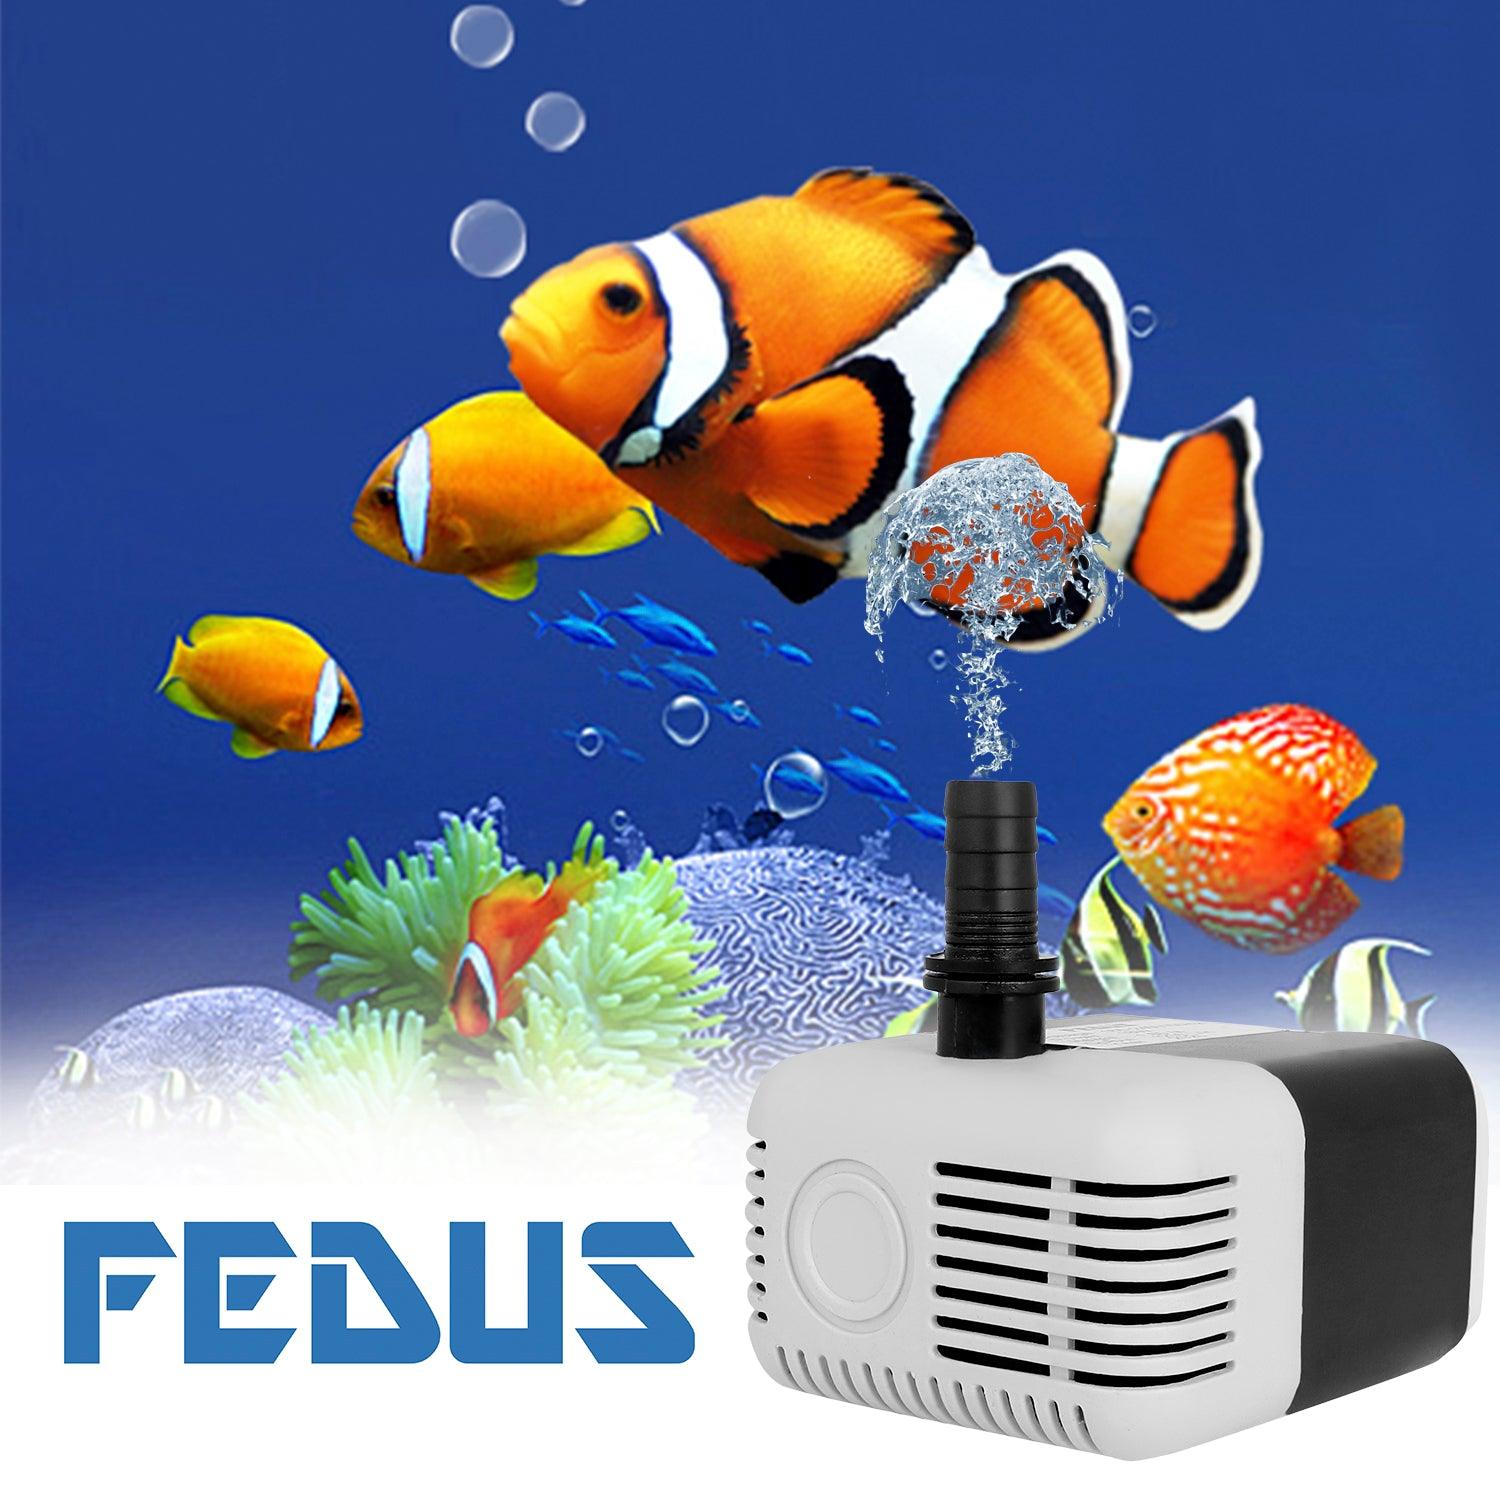 FEDUS 18 Watt Cooler Water Pump, Aquarium water pump, 18 Watt Submersible Small cooler Water Lifting Pump Motor For Ponds, Fountain, Desert Air Cooler, Fish Tank, Statuary, Hydroponics - FEDUS